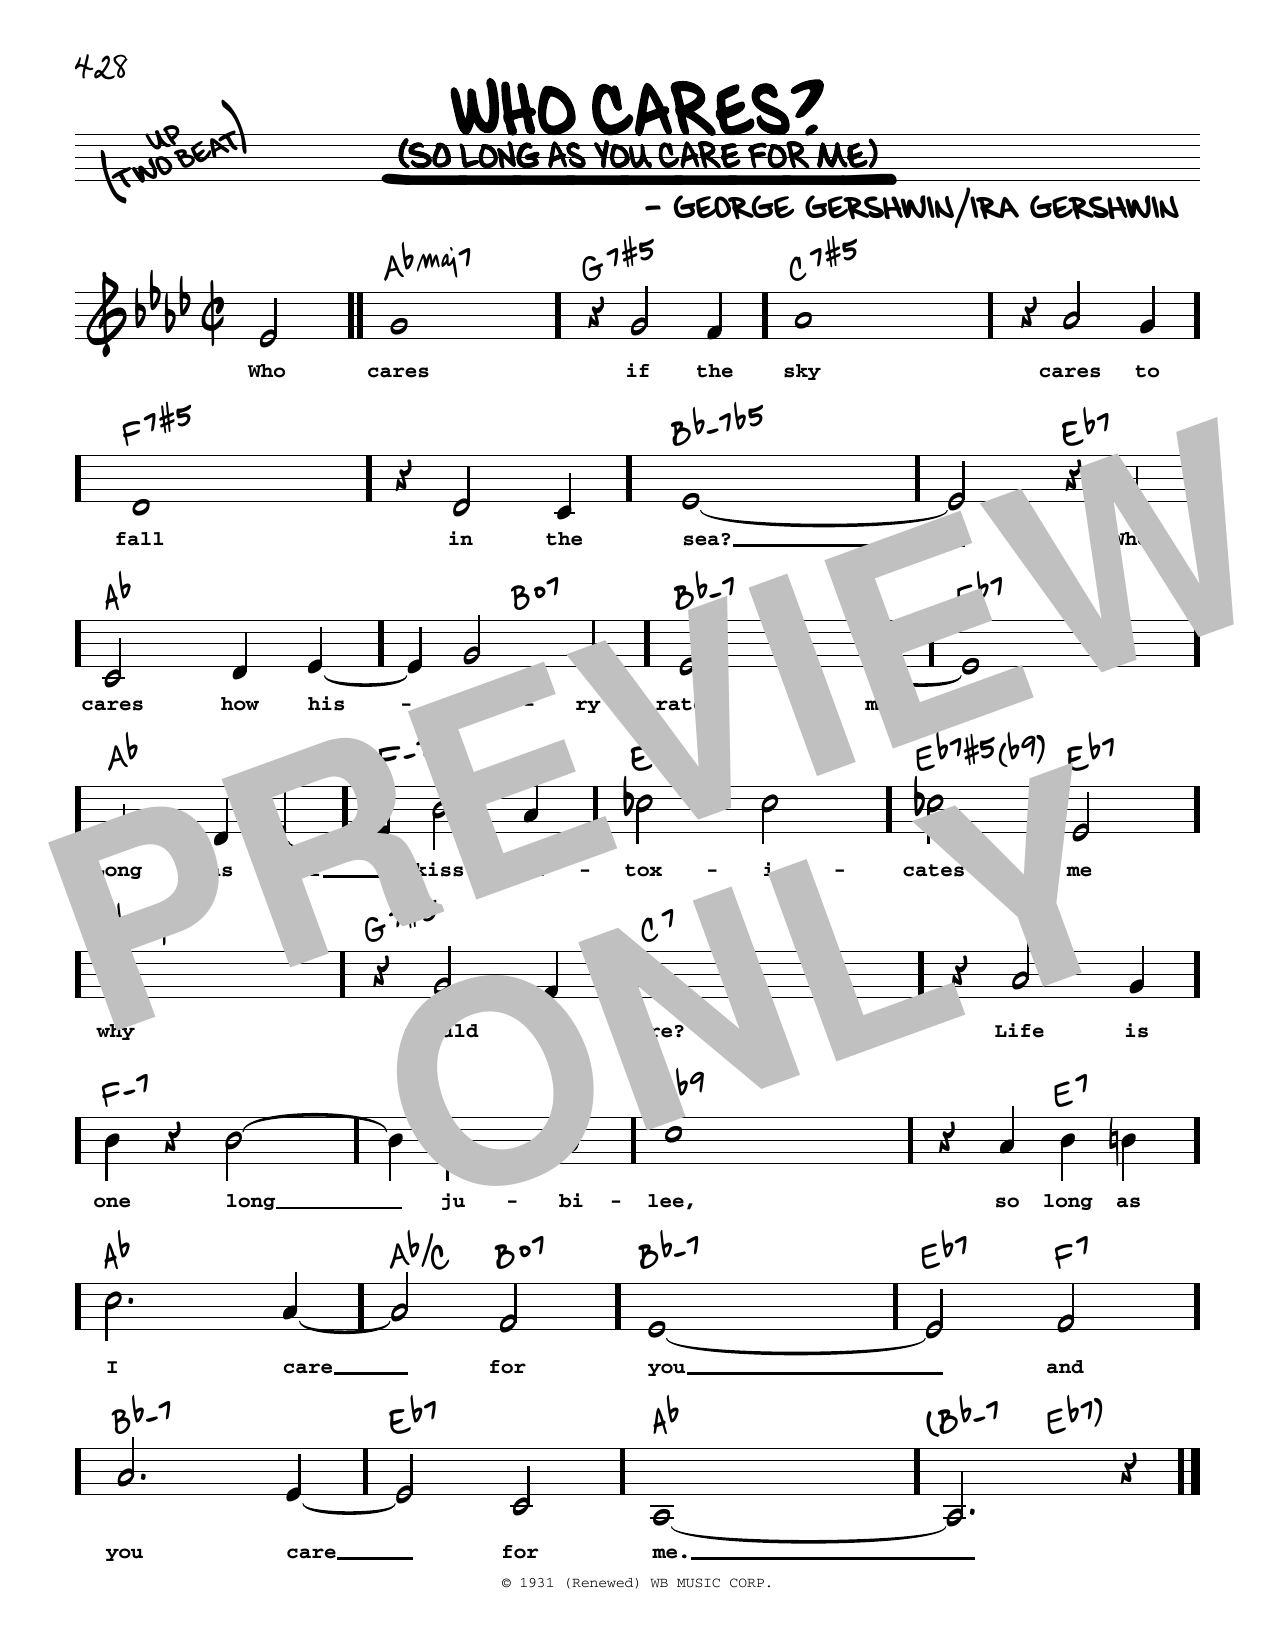 Download George Gershwin & Ira Gershwin Who Cares? (So Long As You Care For Me) Sheet Music